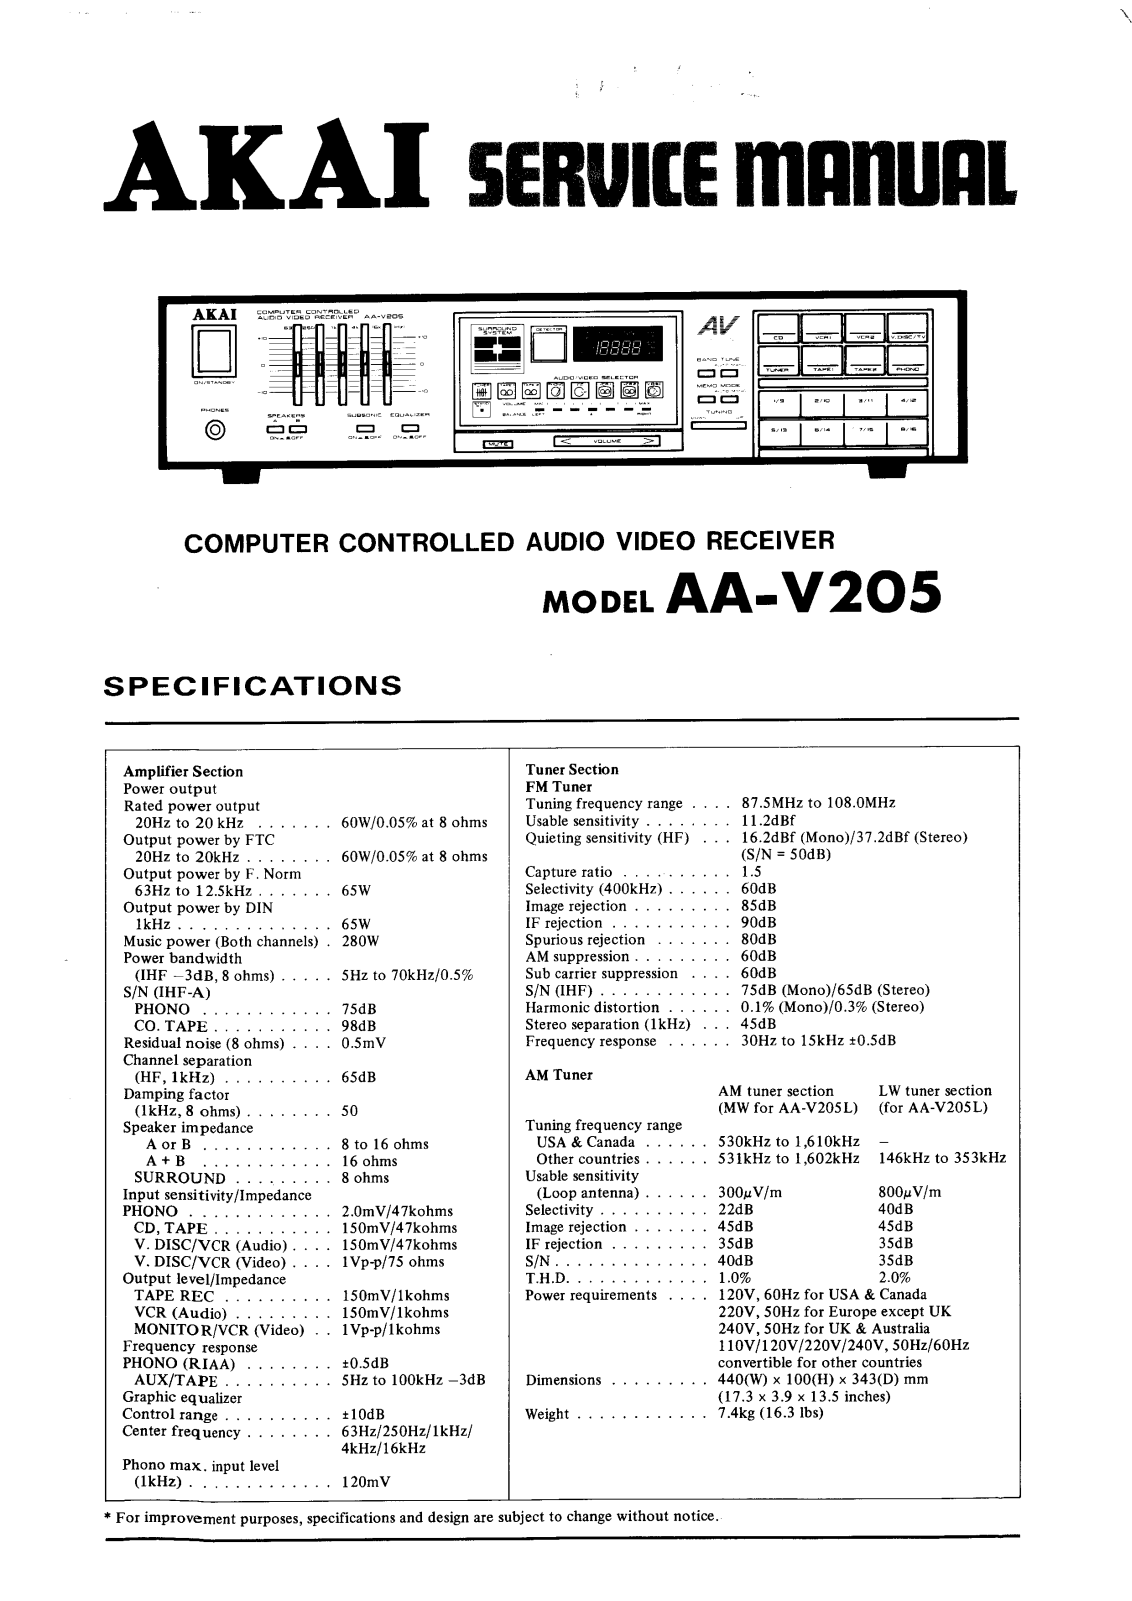 Akai AAV-205 Service manual